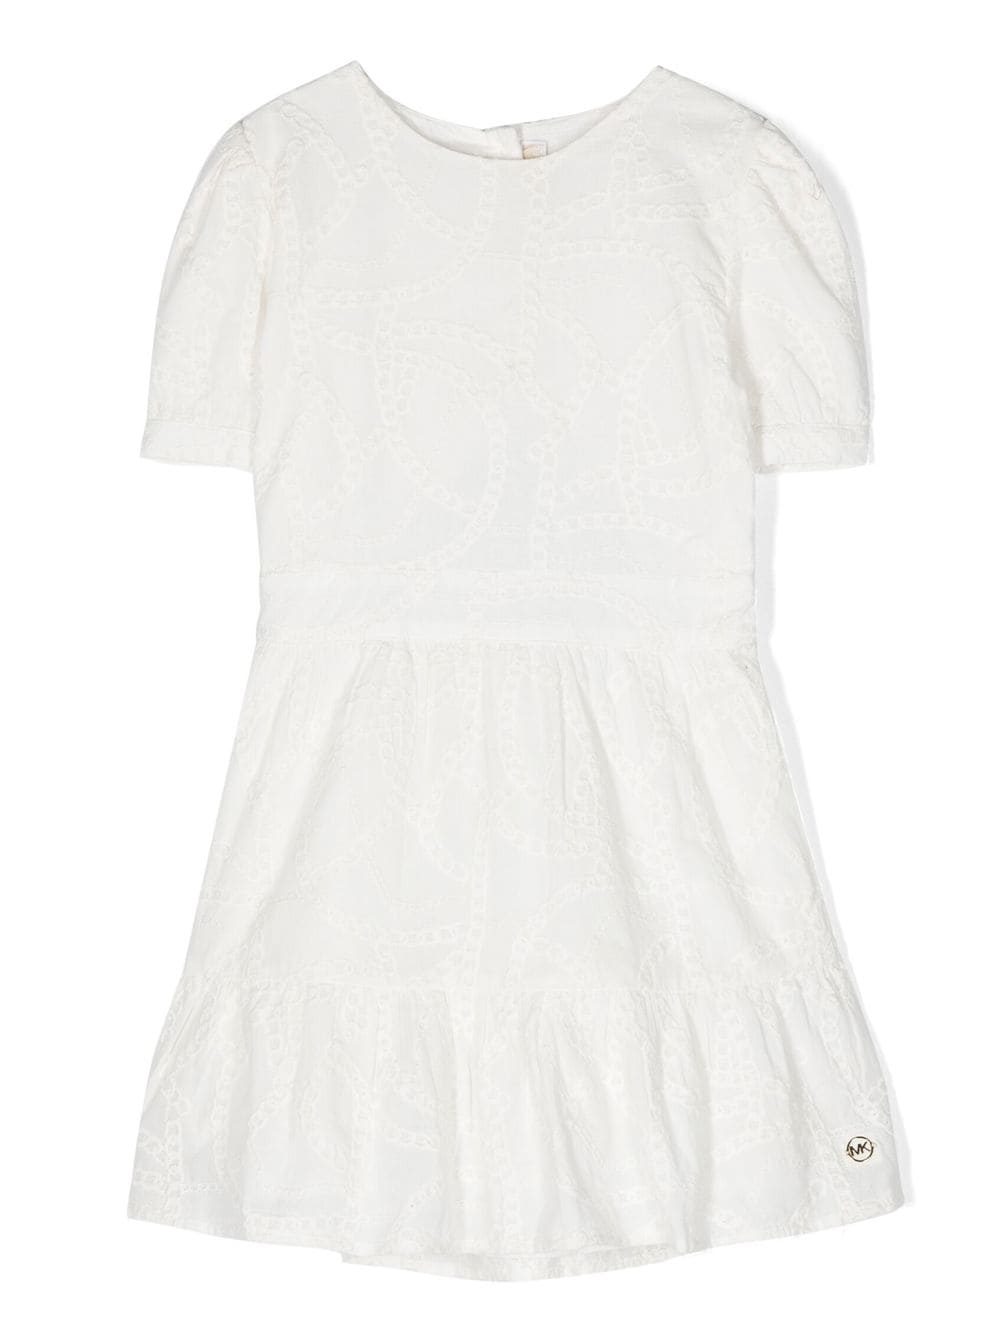 Michael Kors Kids ruffled-trim broderie dress - White